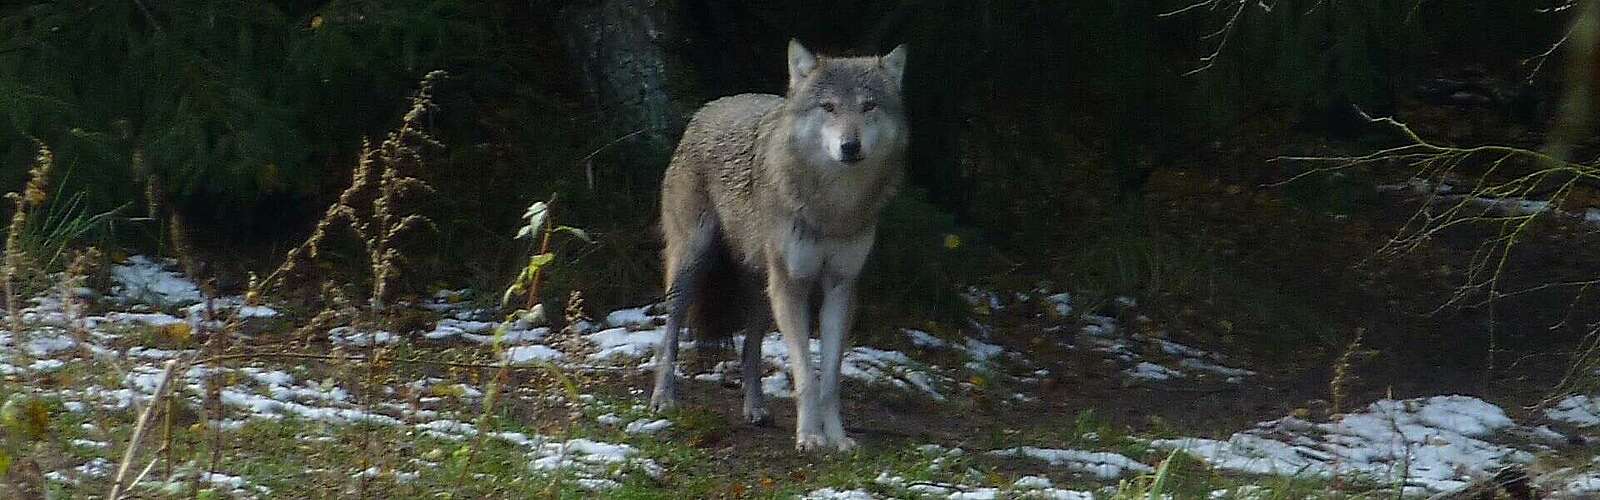 Wolf im Gehege,
        
    

        Foto: Fotograf / Lizenz - Media Import/Ronald Keusch